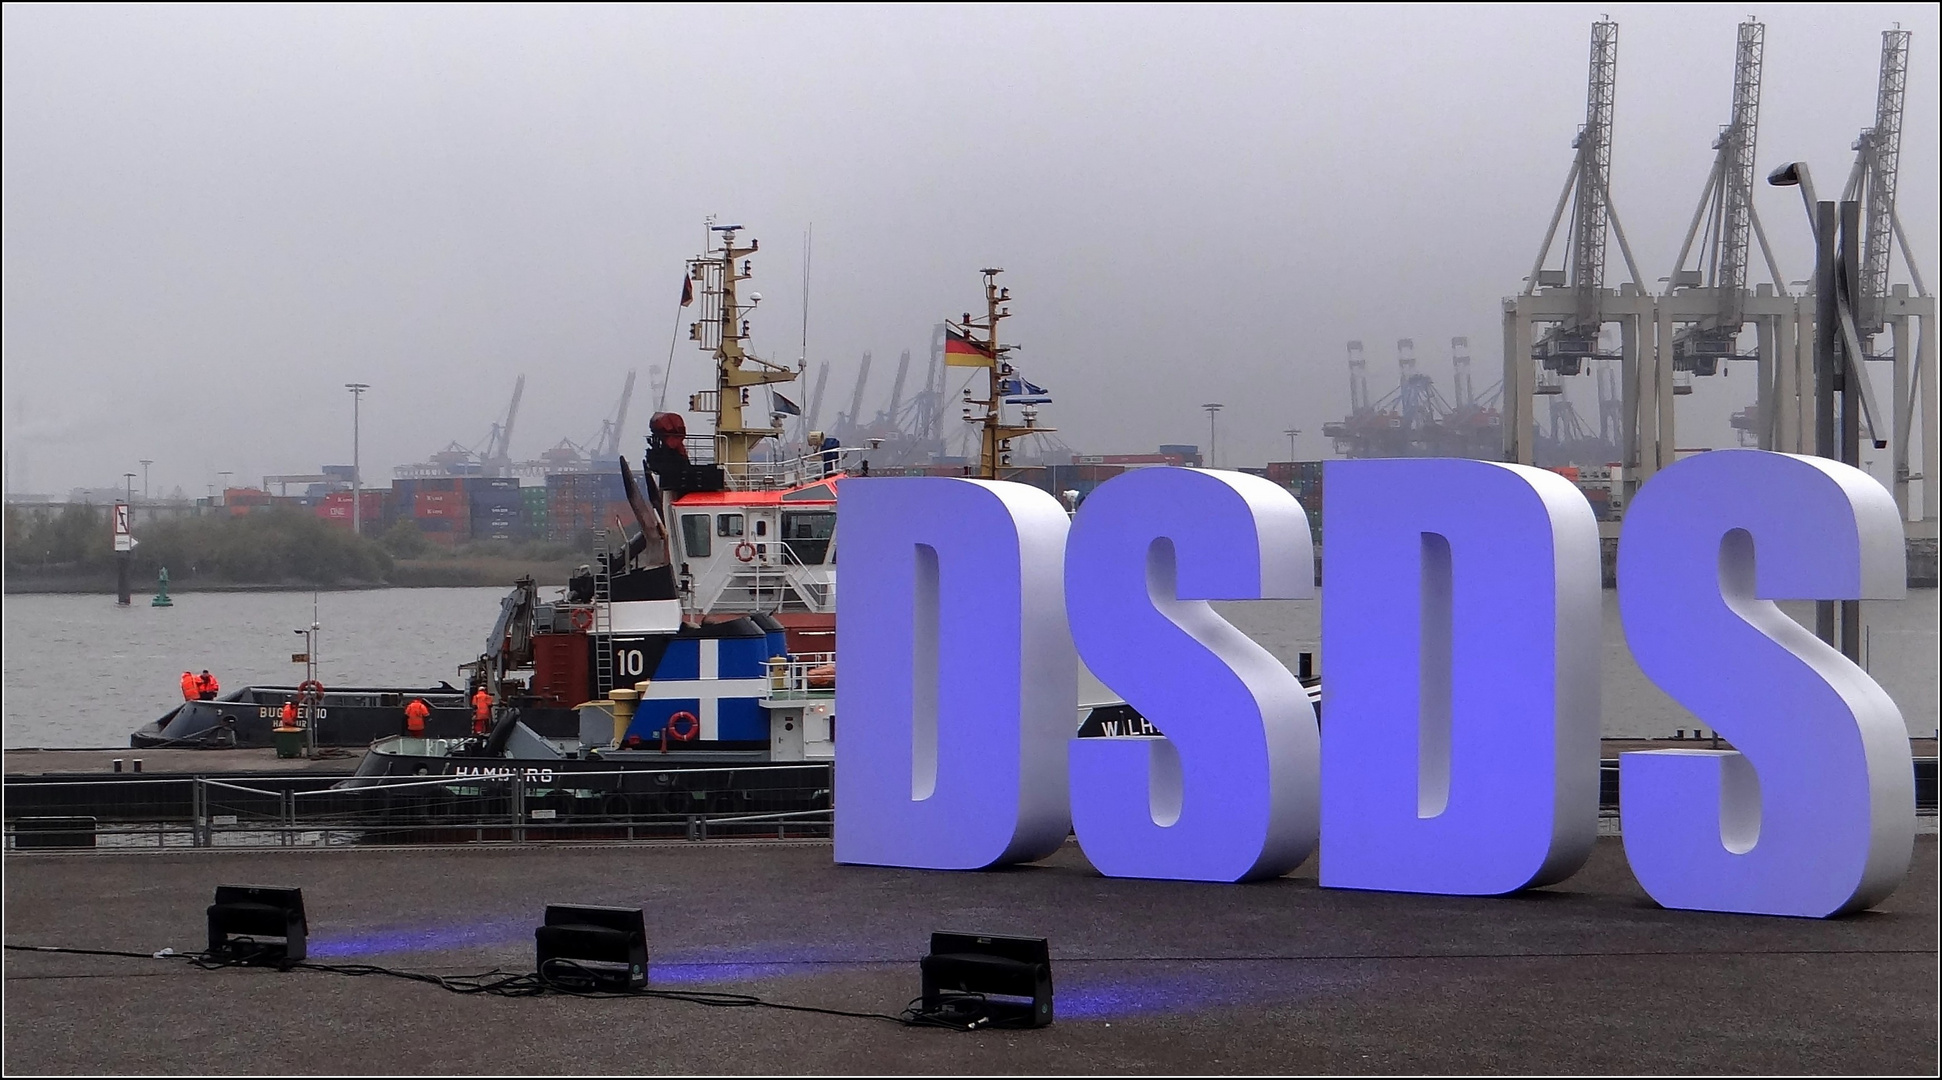 "DSDS" in Hamburg....